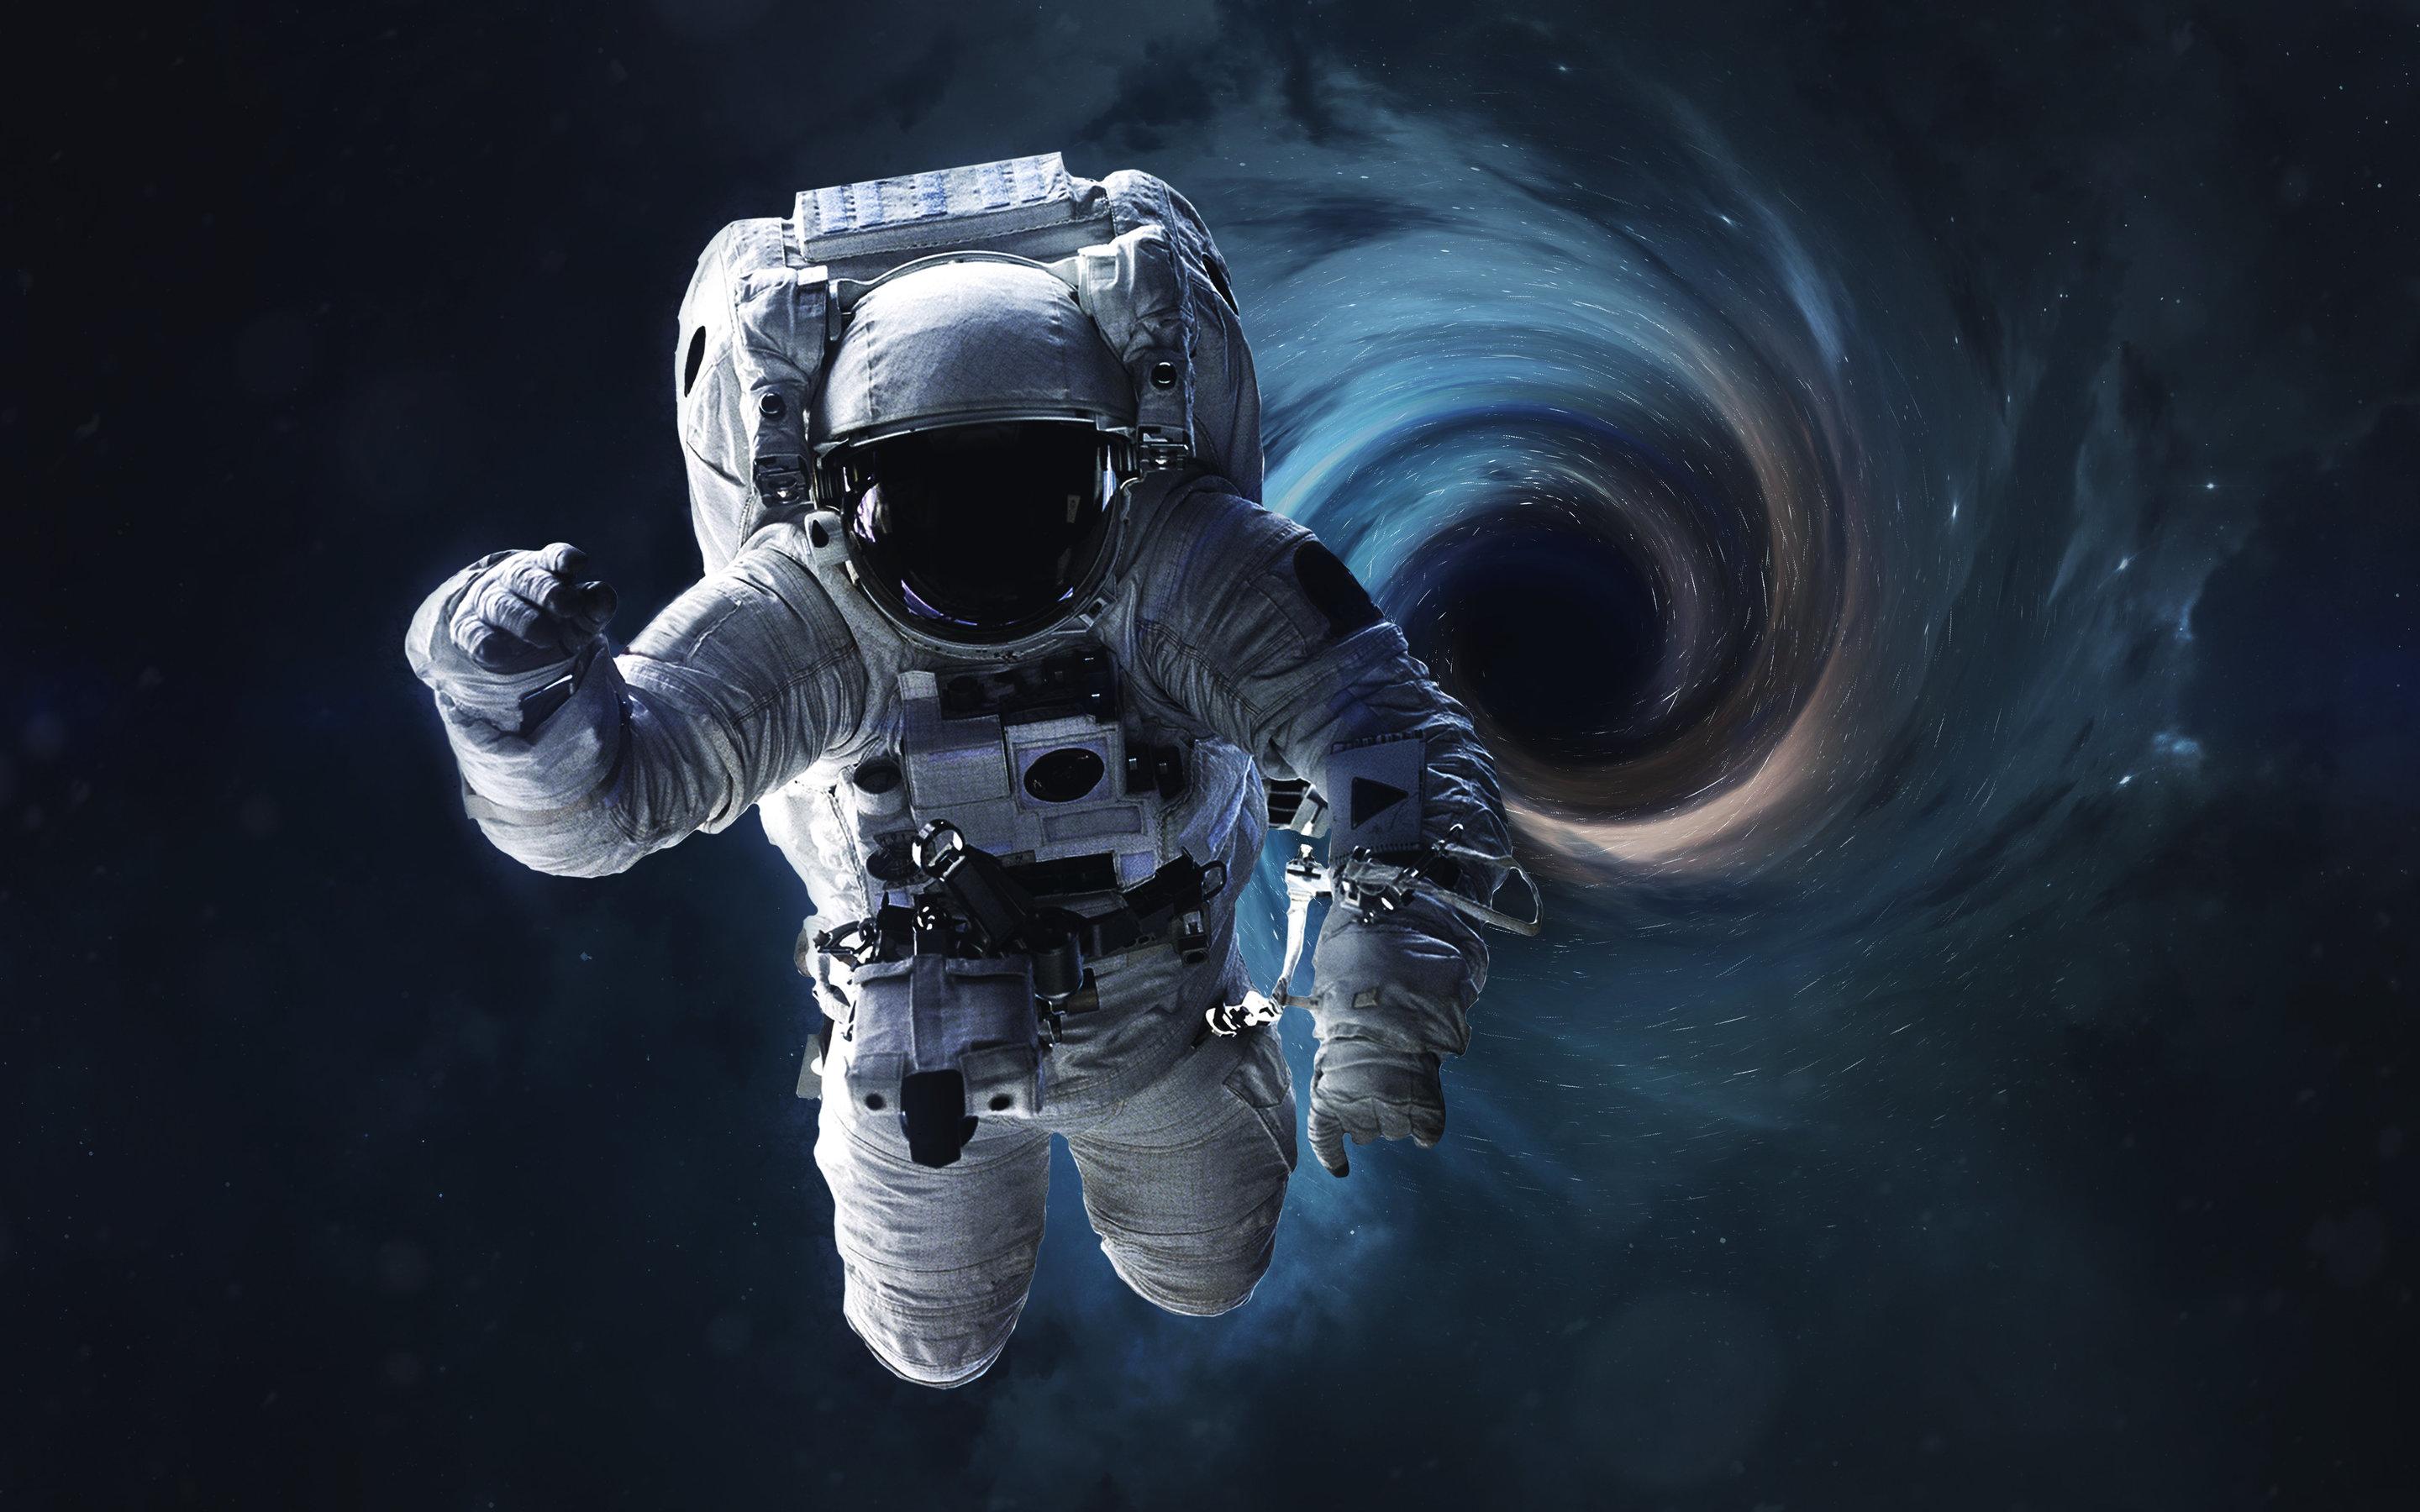 Rotating black holes may serve as gentle portals